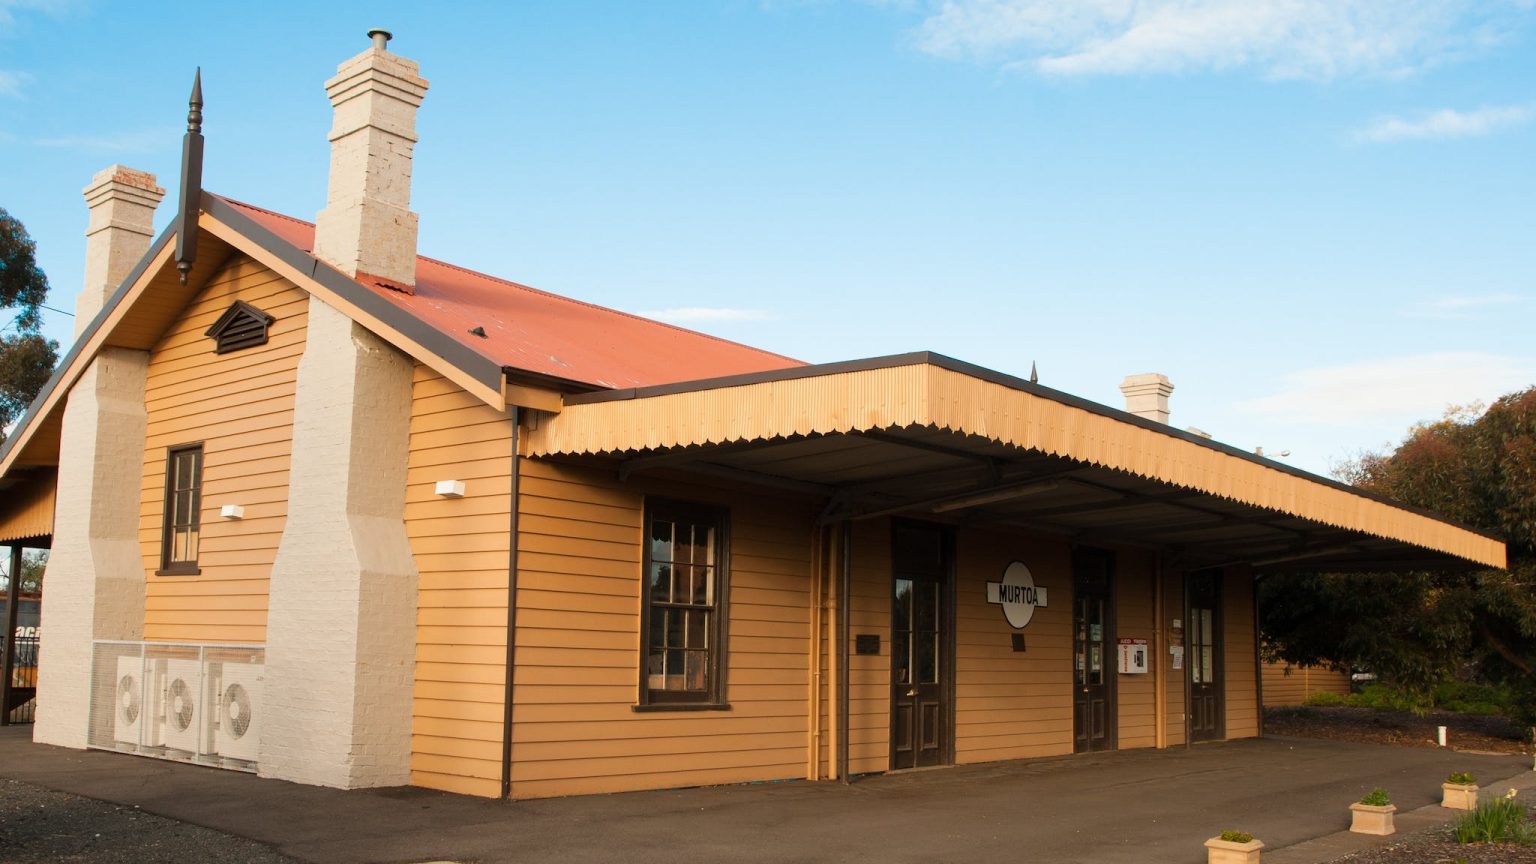 Museum of Railway and Industry history at Murtoa Museum Precinct.